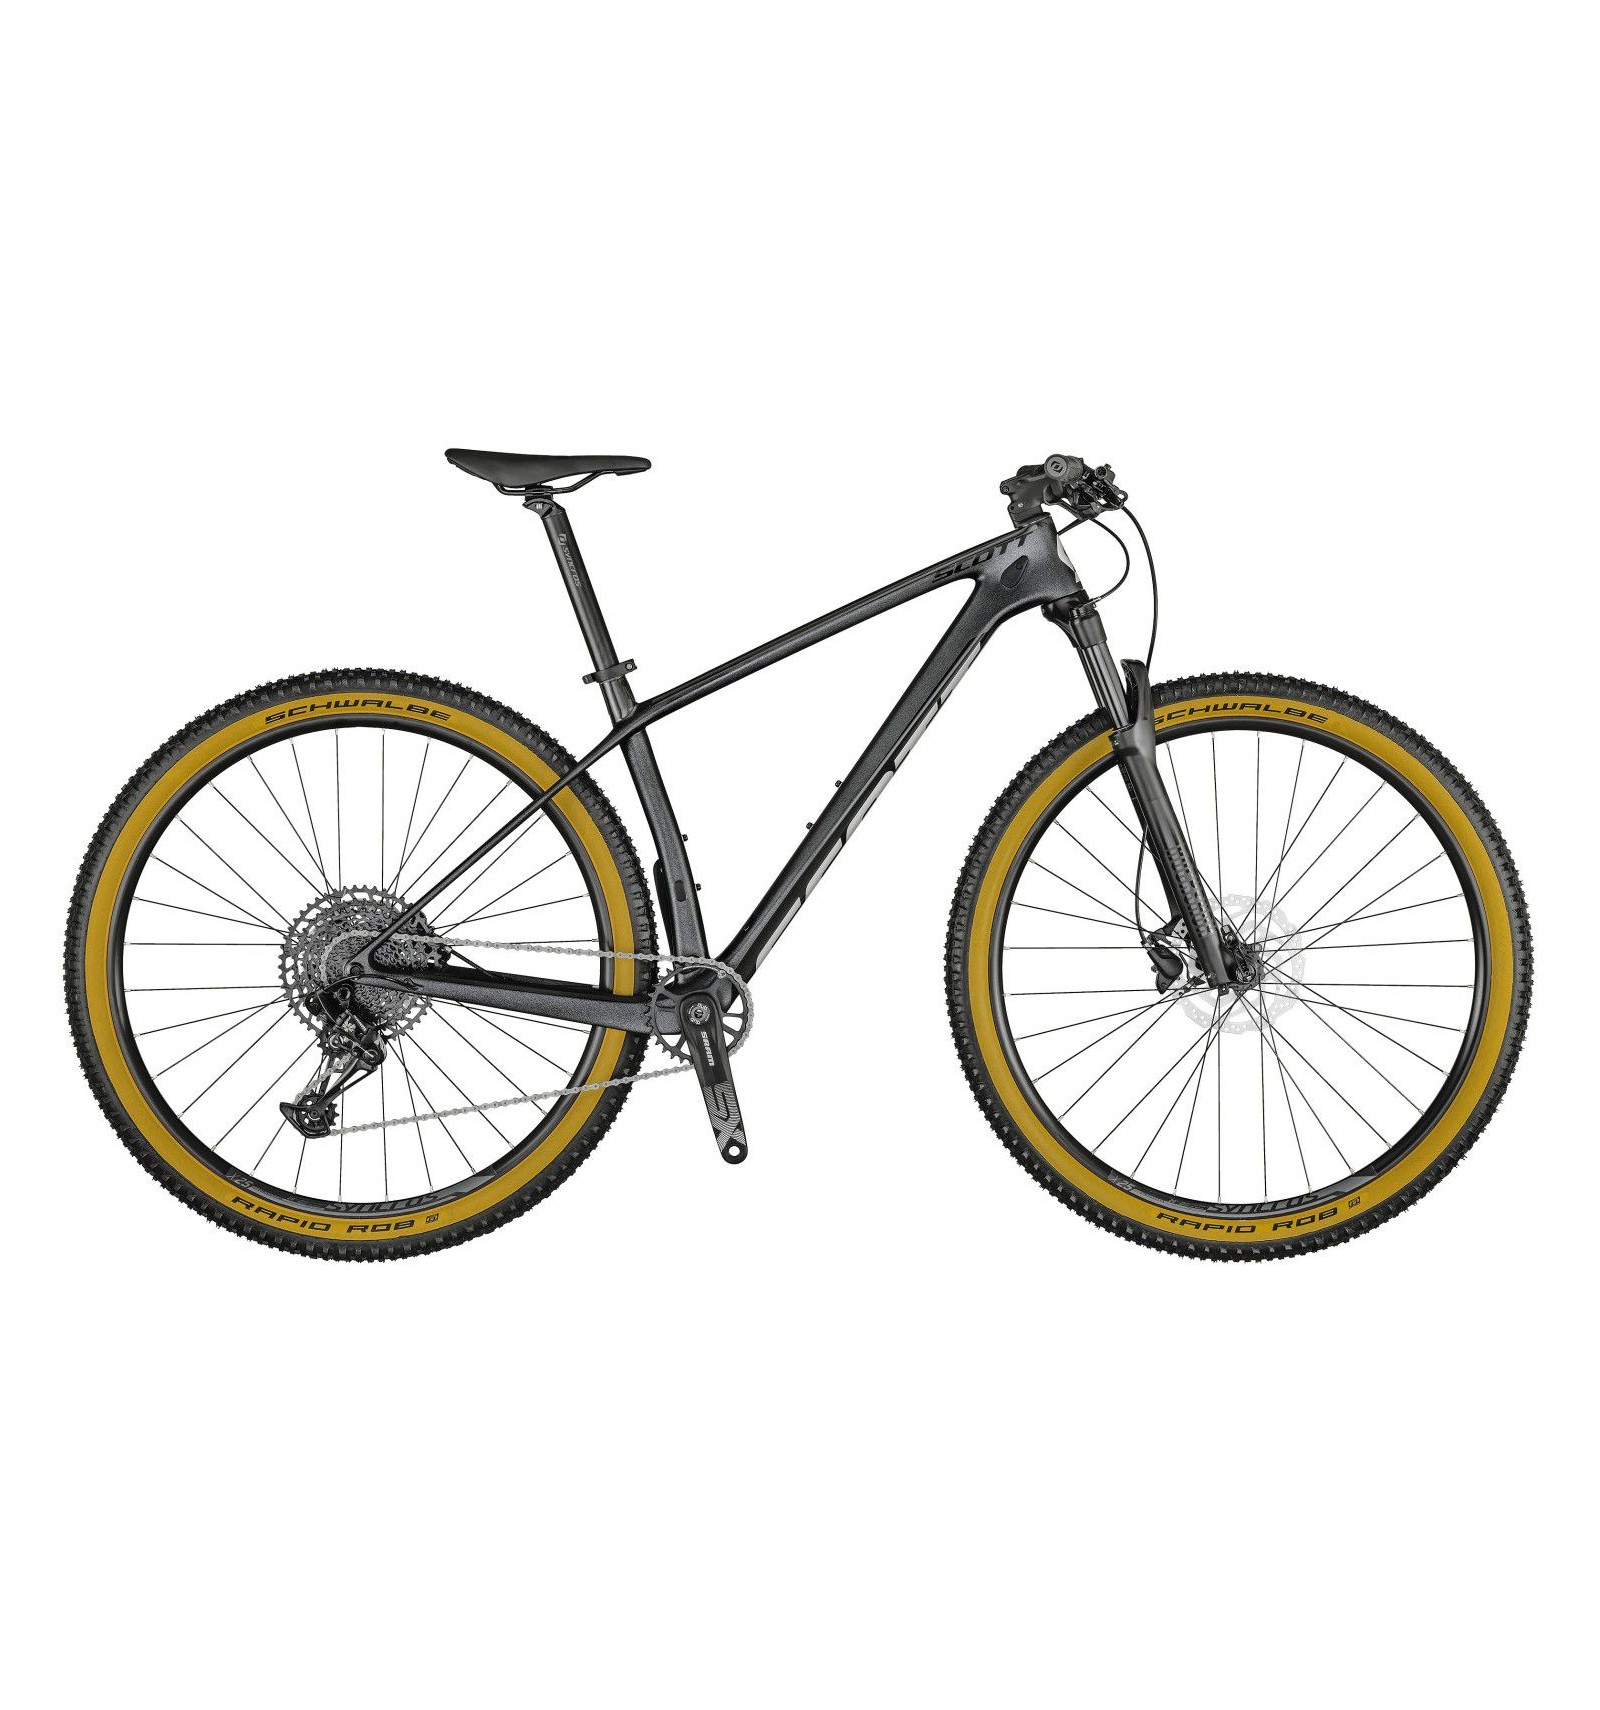 Bicicleta Scott Scale 940 2021 - Ciclos Currá